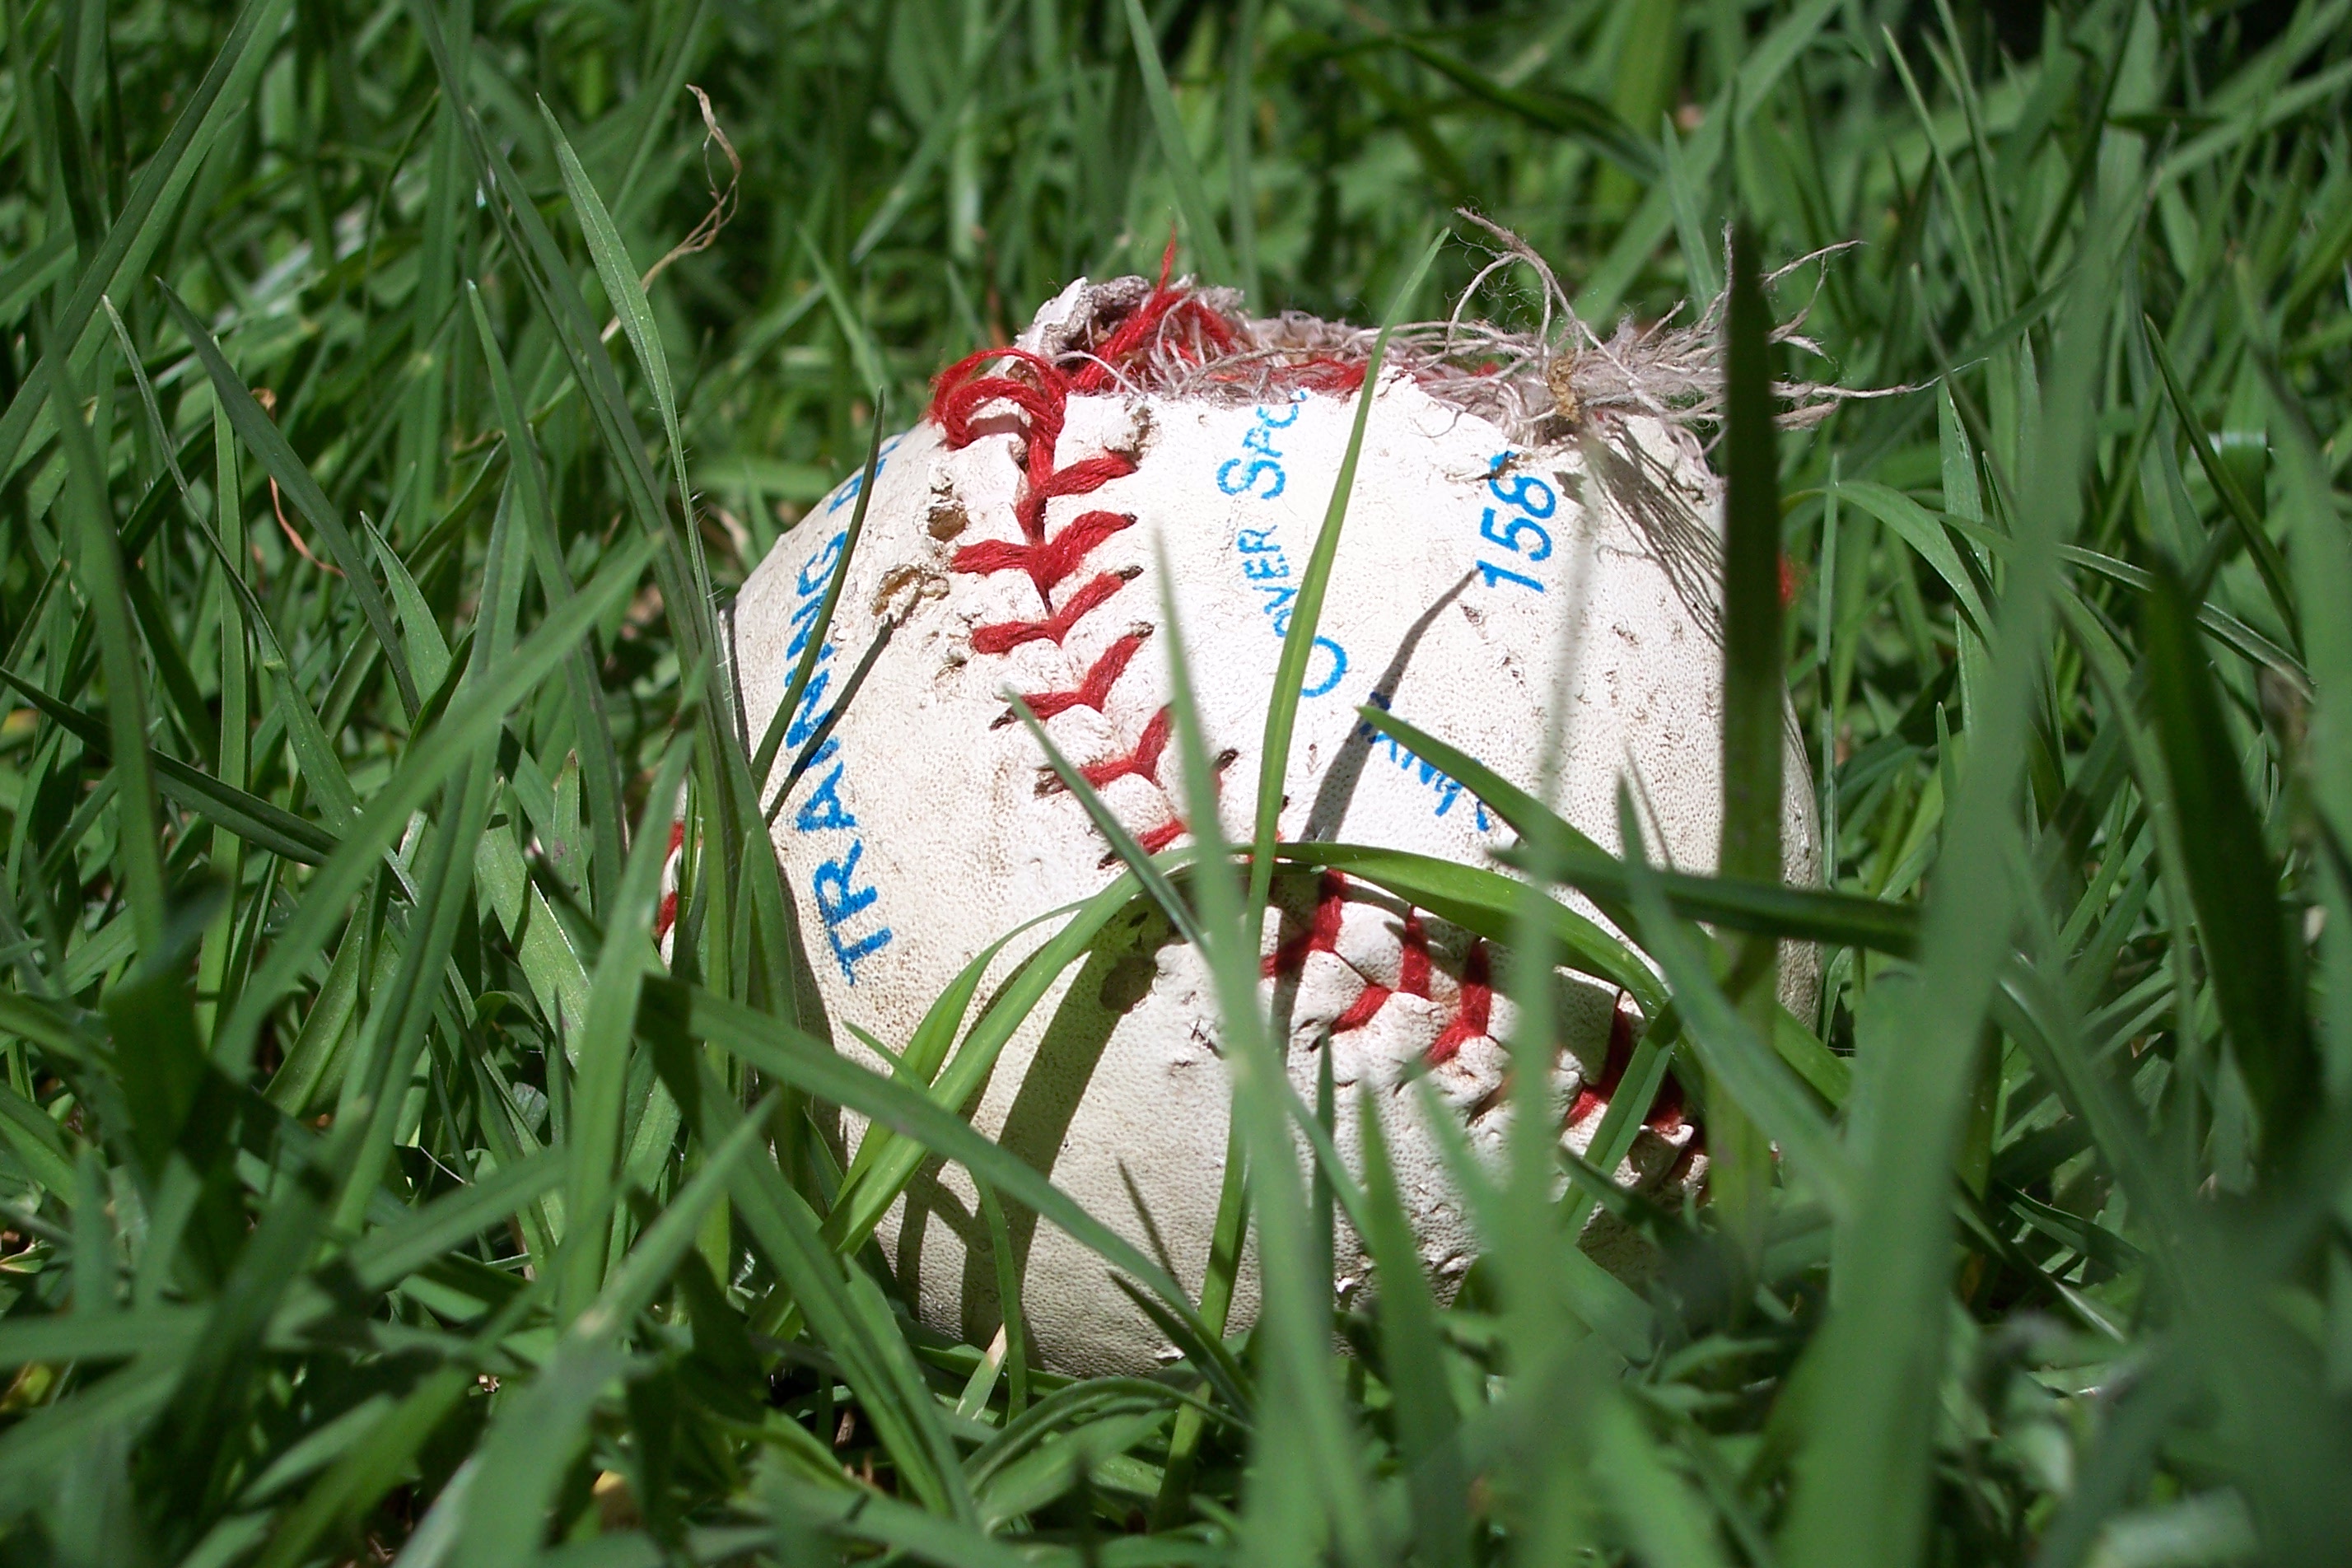 File:Baseball in the grass.jpg - Wikimedia Commons